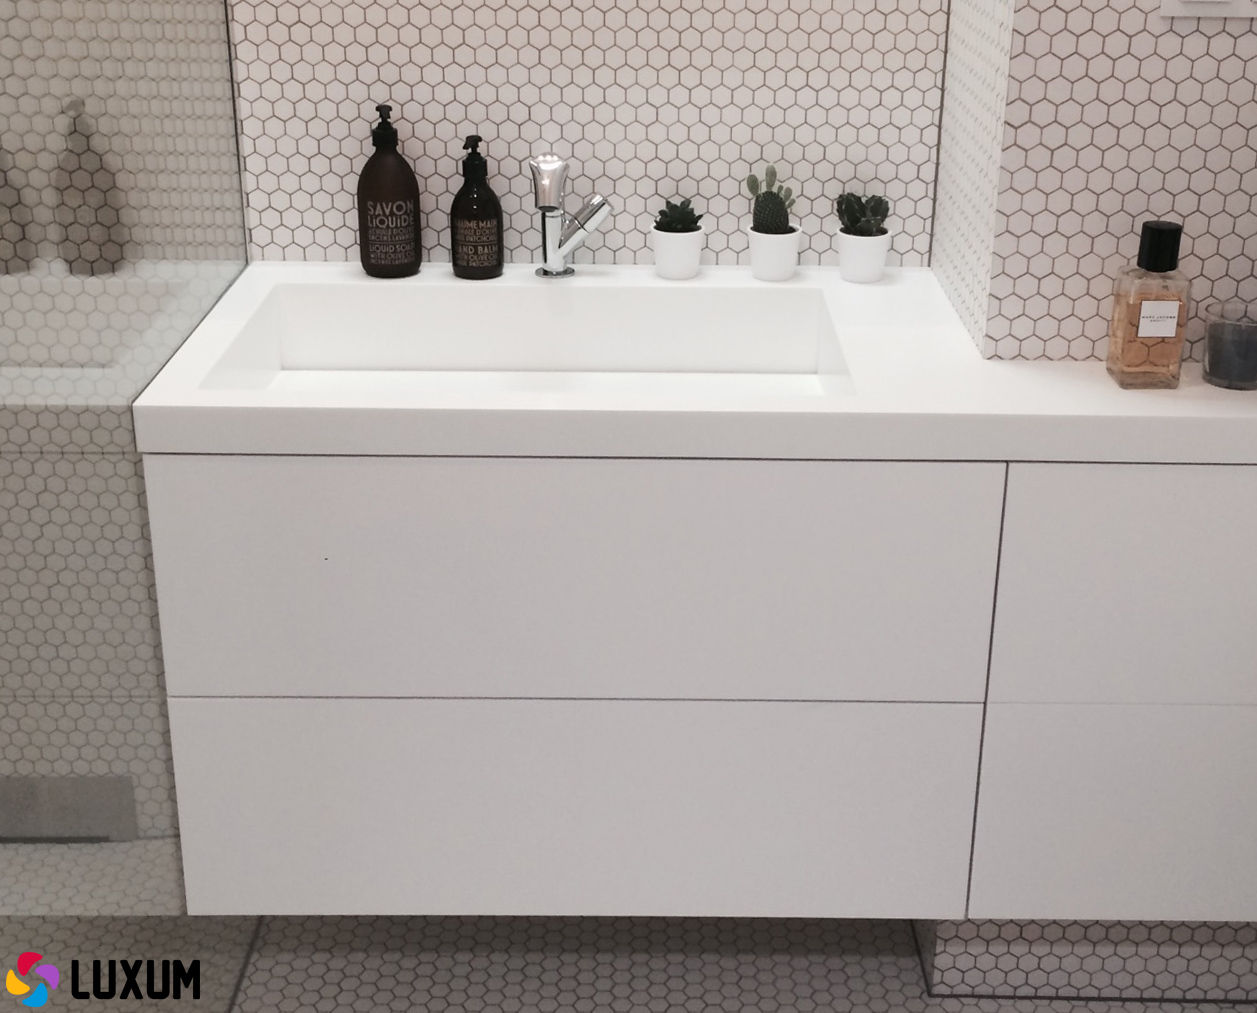 Minimalistyczna umywalka od Luxum, Luxum Luxum 미니멀리스트 욕실